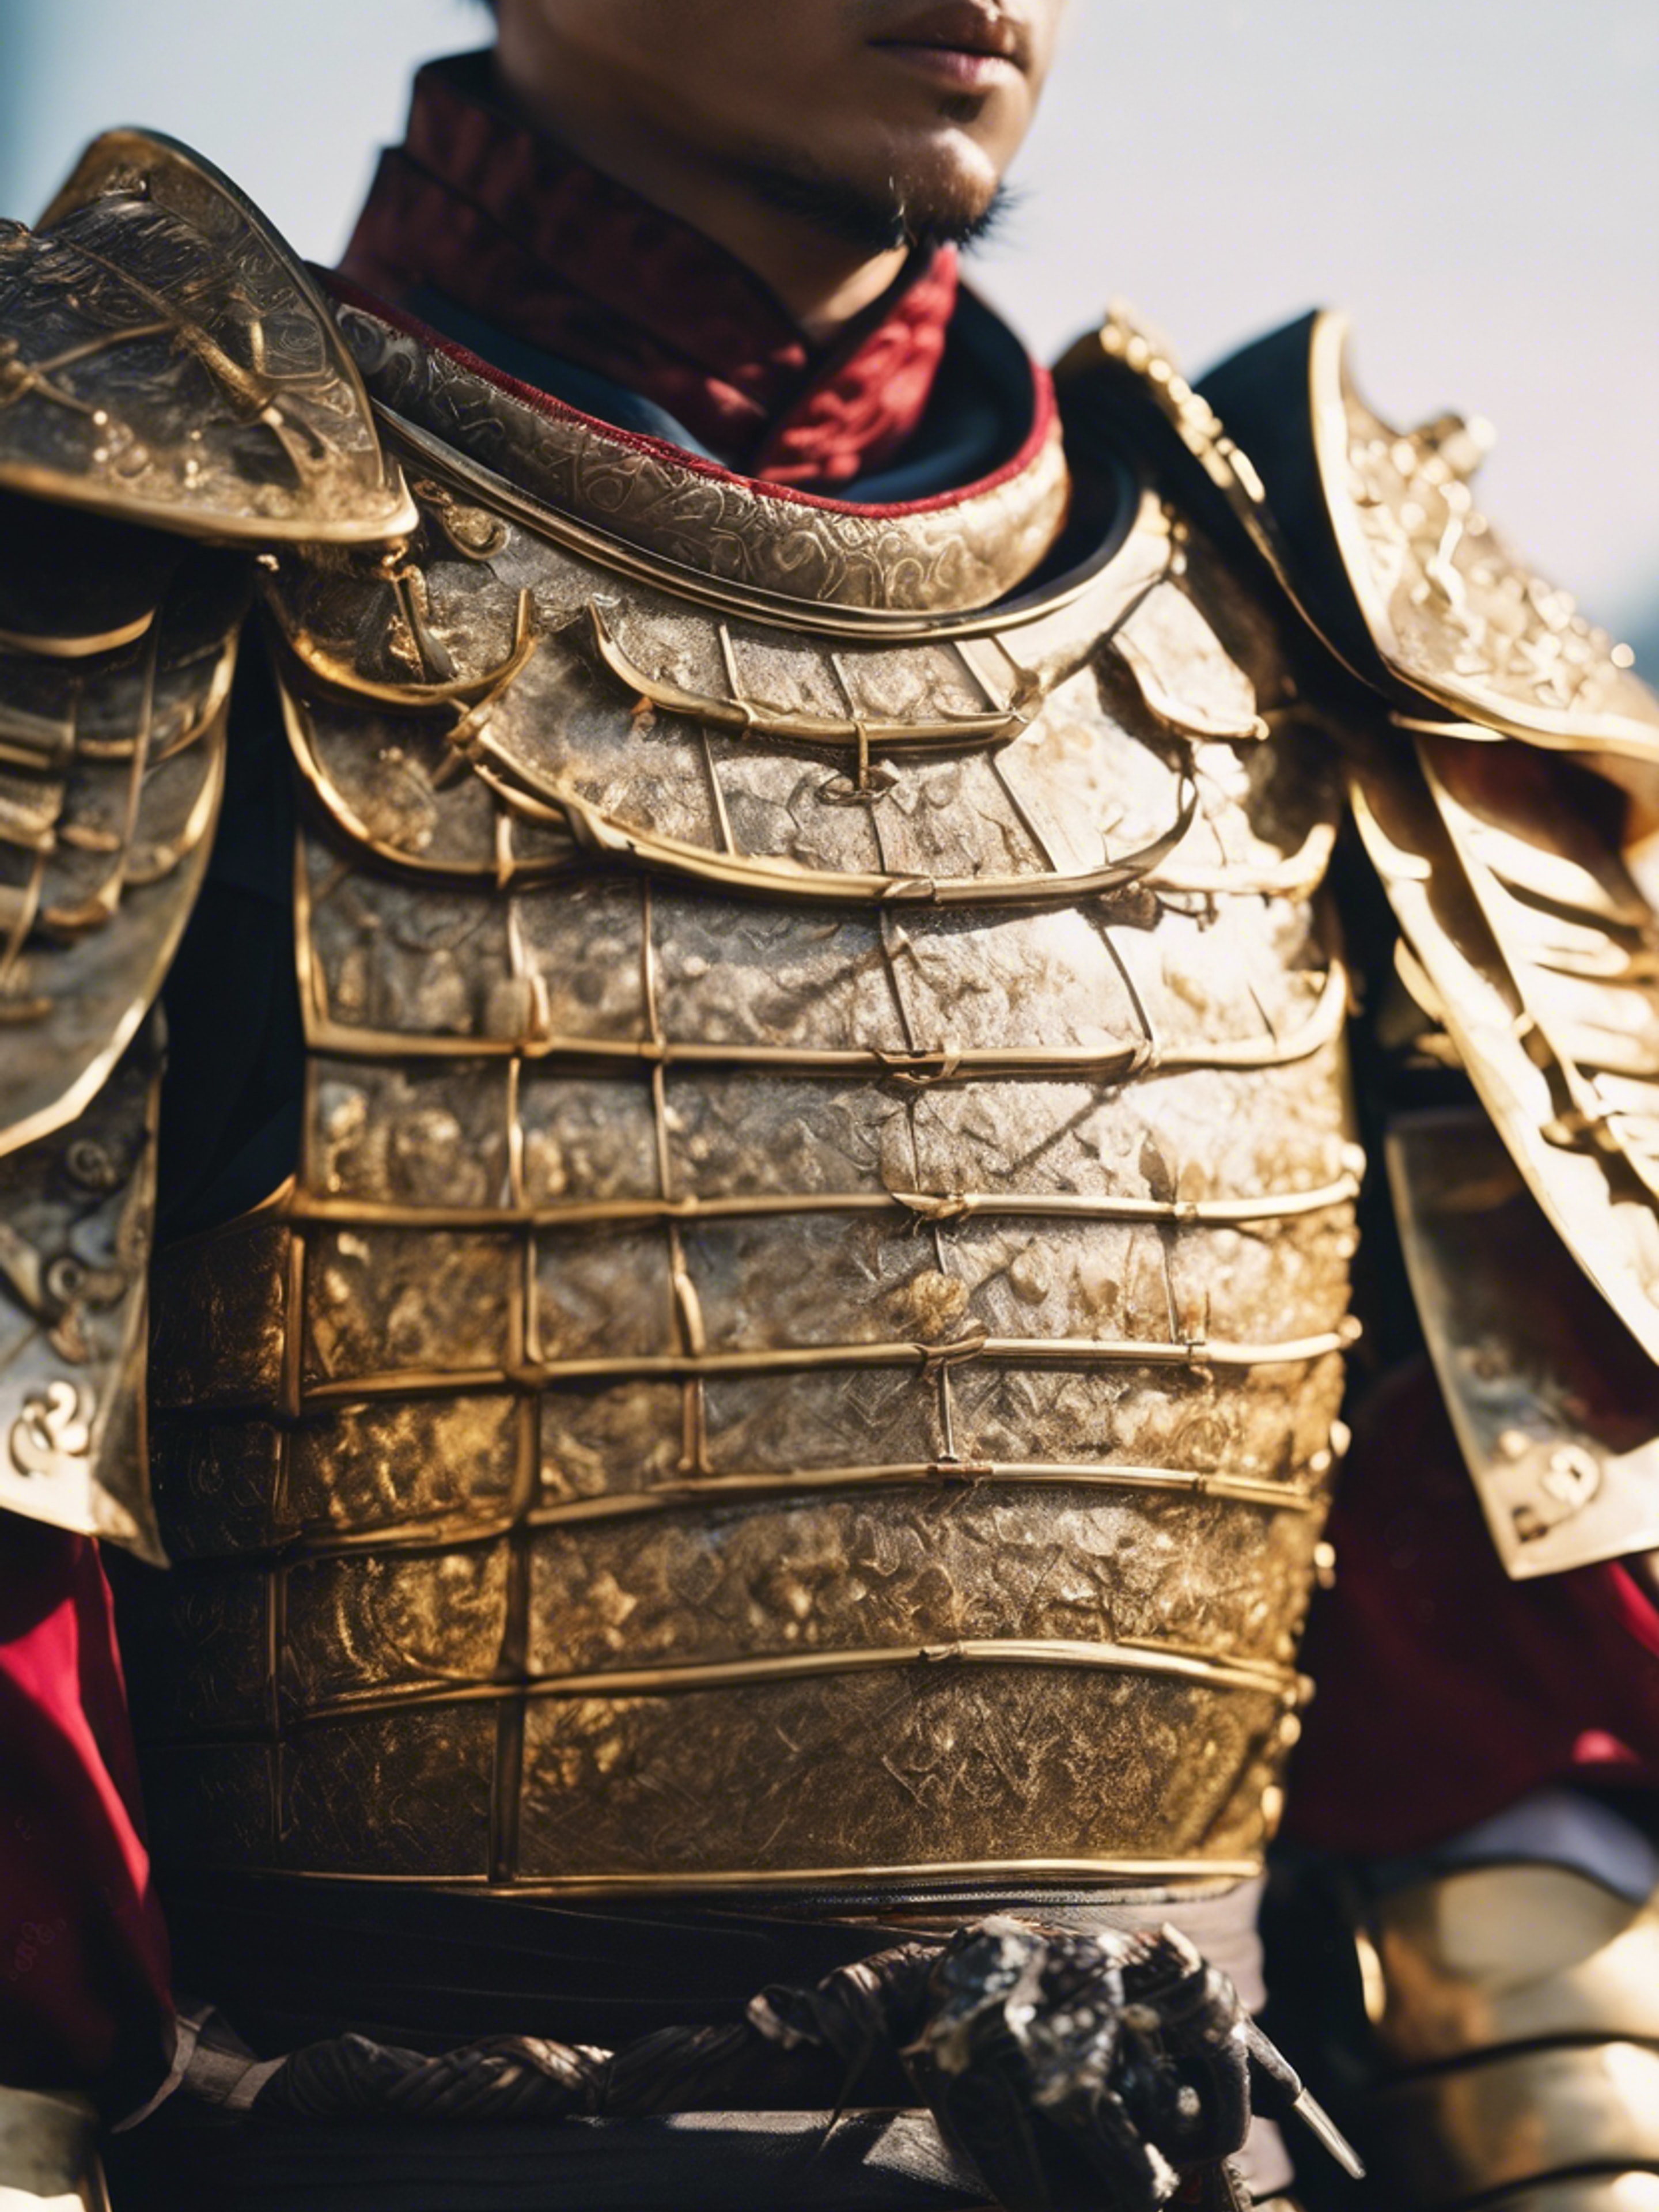 A close-up detail of a beautiful samurai armor glistening in the sunlight Tapet[f86ed1772fa04d06b0b3]